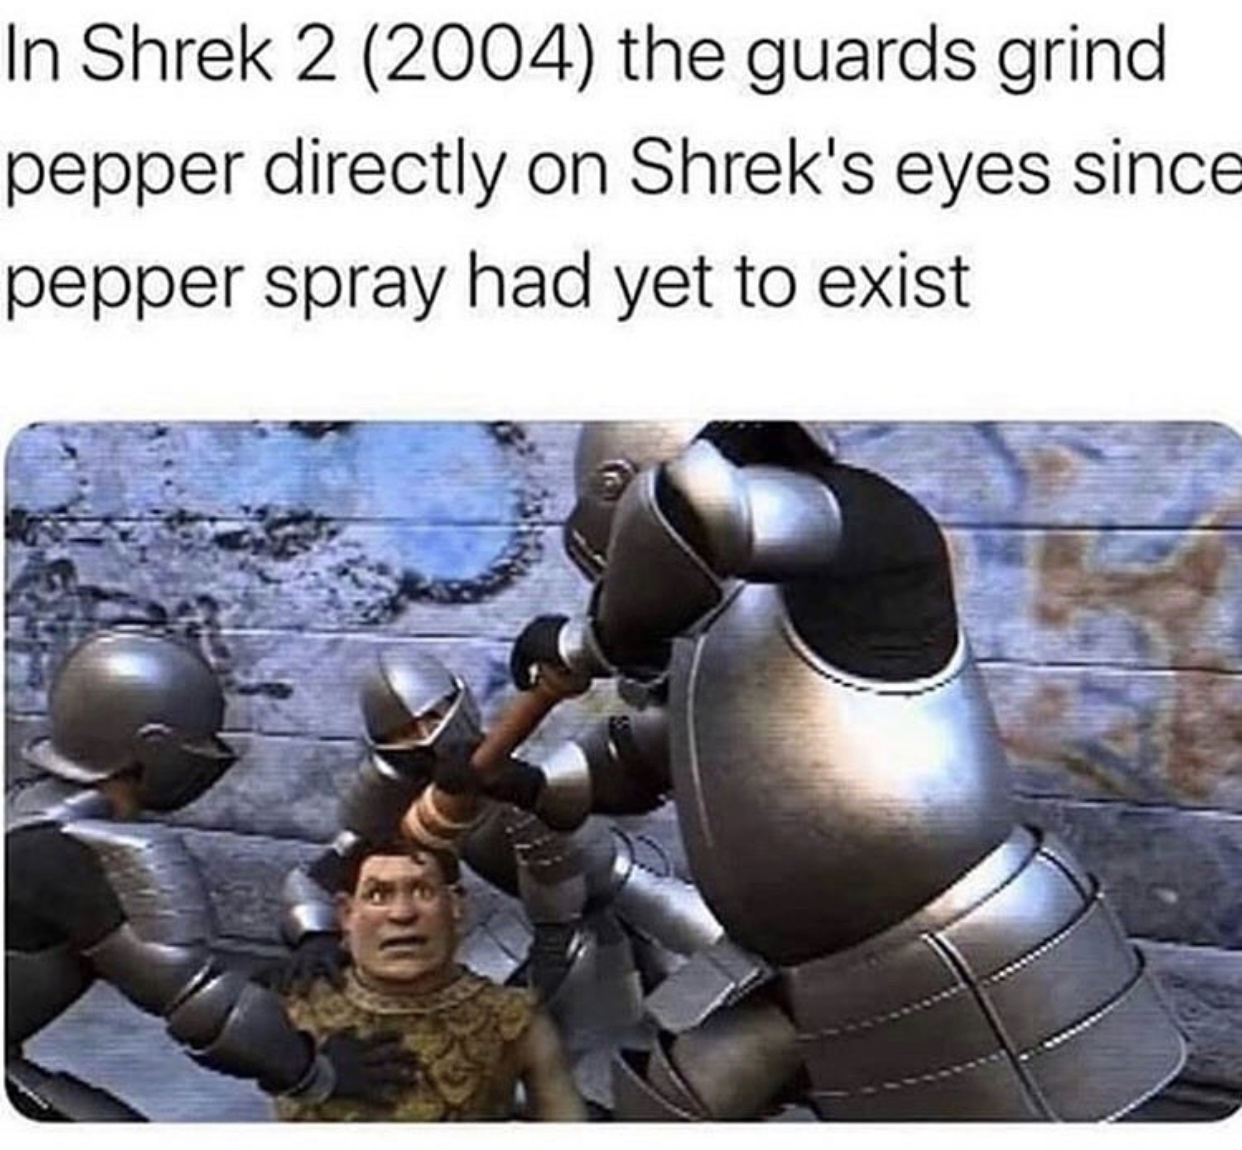 shrek 2 pepper spray - In Shrek 2 2004 the guards grind pepper directly on Shrek's eyes since pepper spray had yet to exist